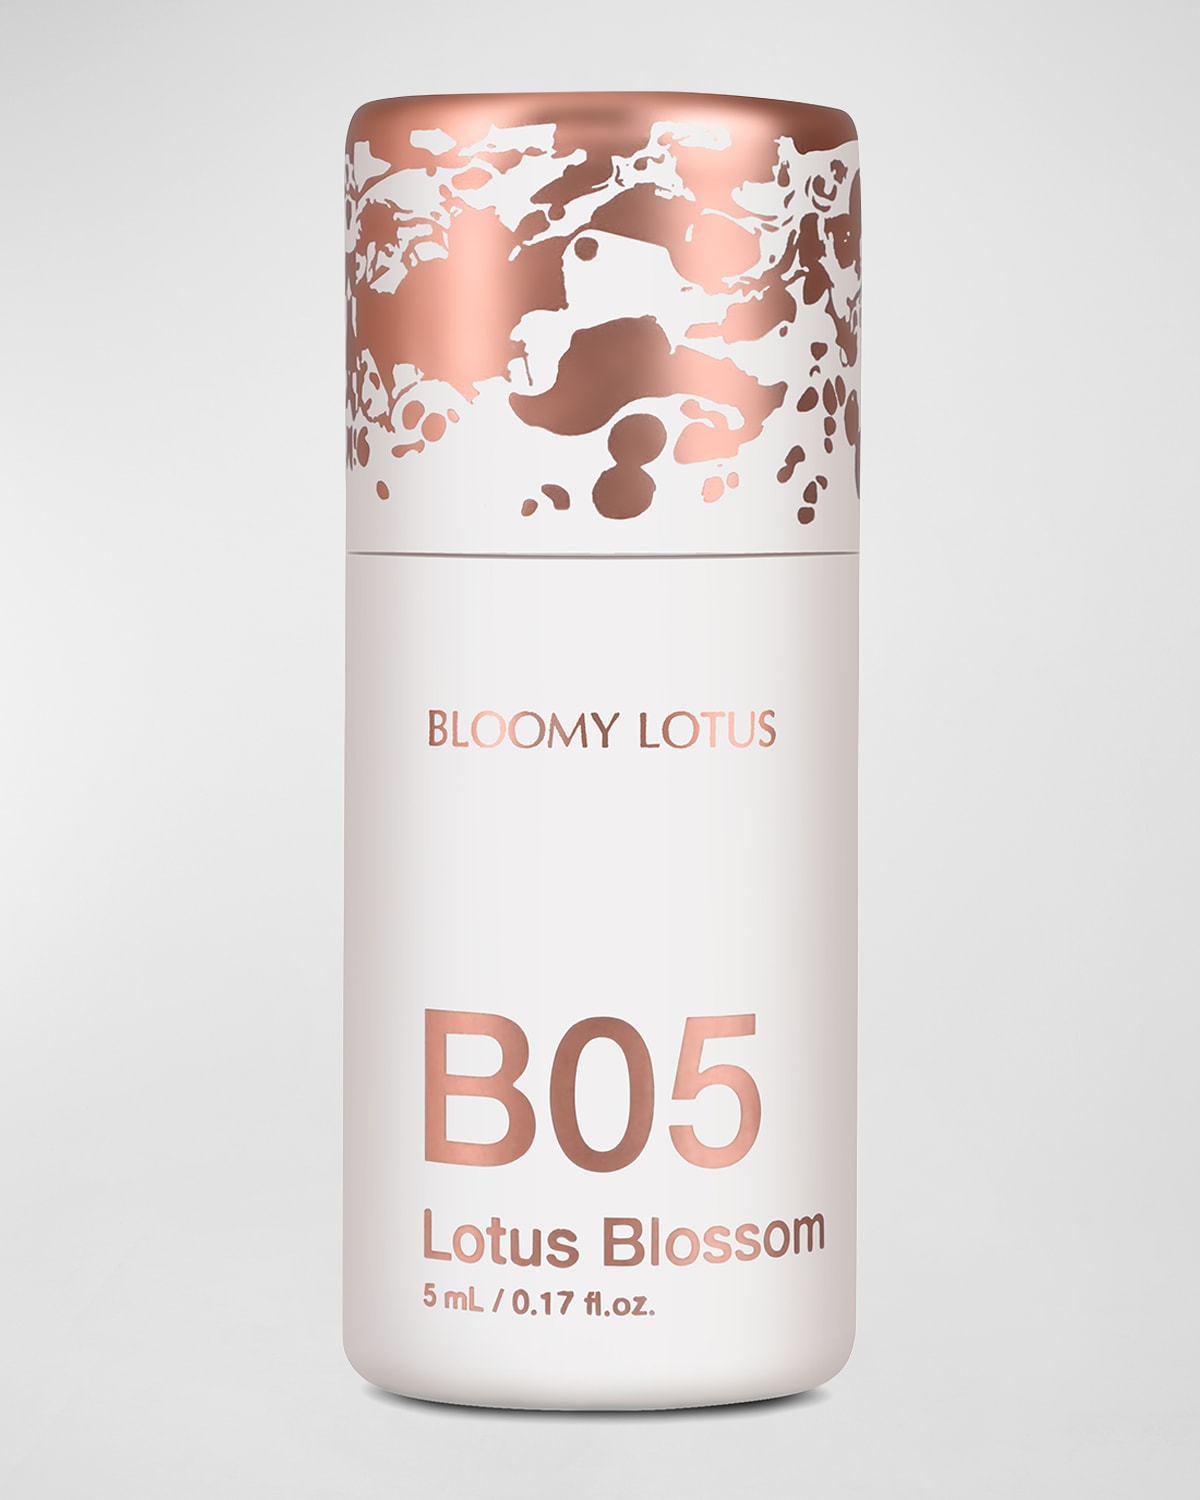 Bloomy Lotus 5 ml Lotus Blossom Essential Oil